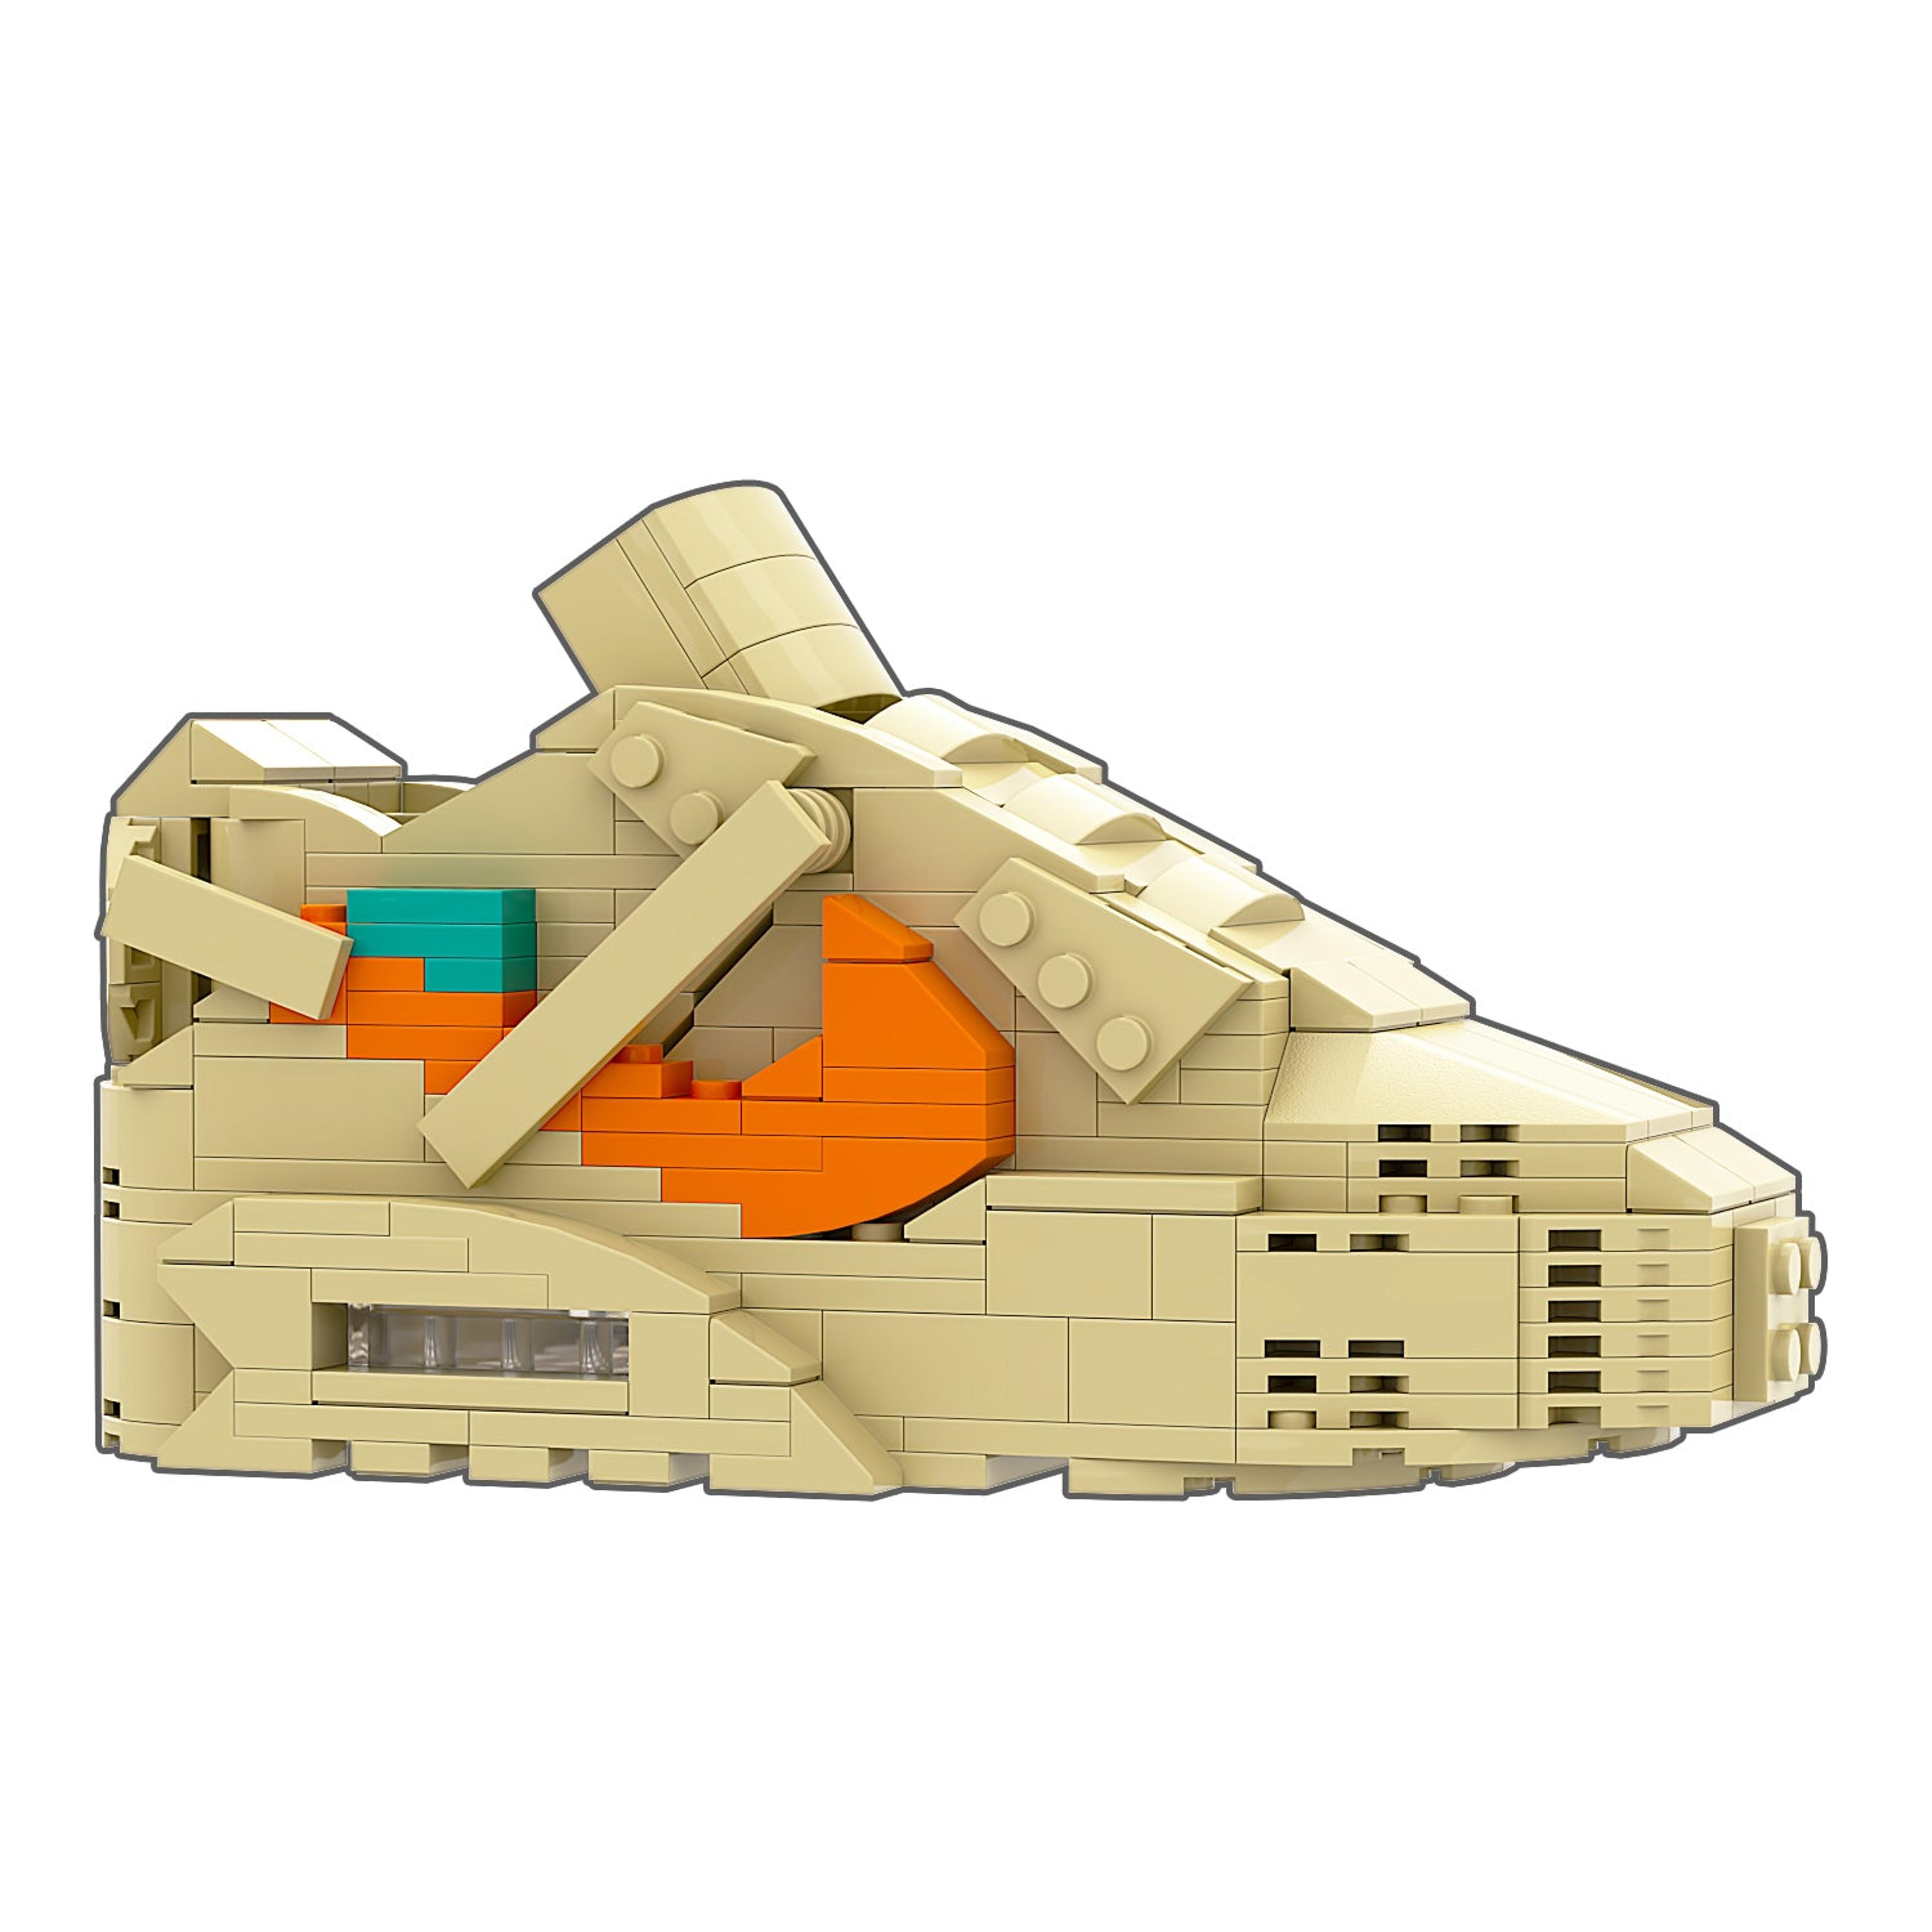 Alternate View 5 of REGULAR Air Max 90 "Desert Ore" Sneaker Bricks with Mini Figure